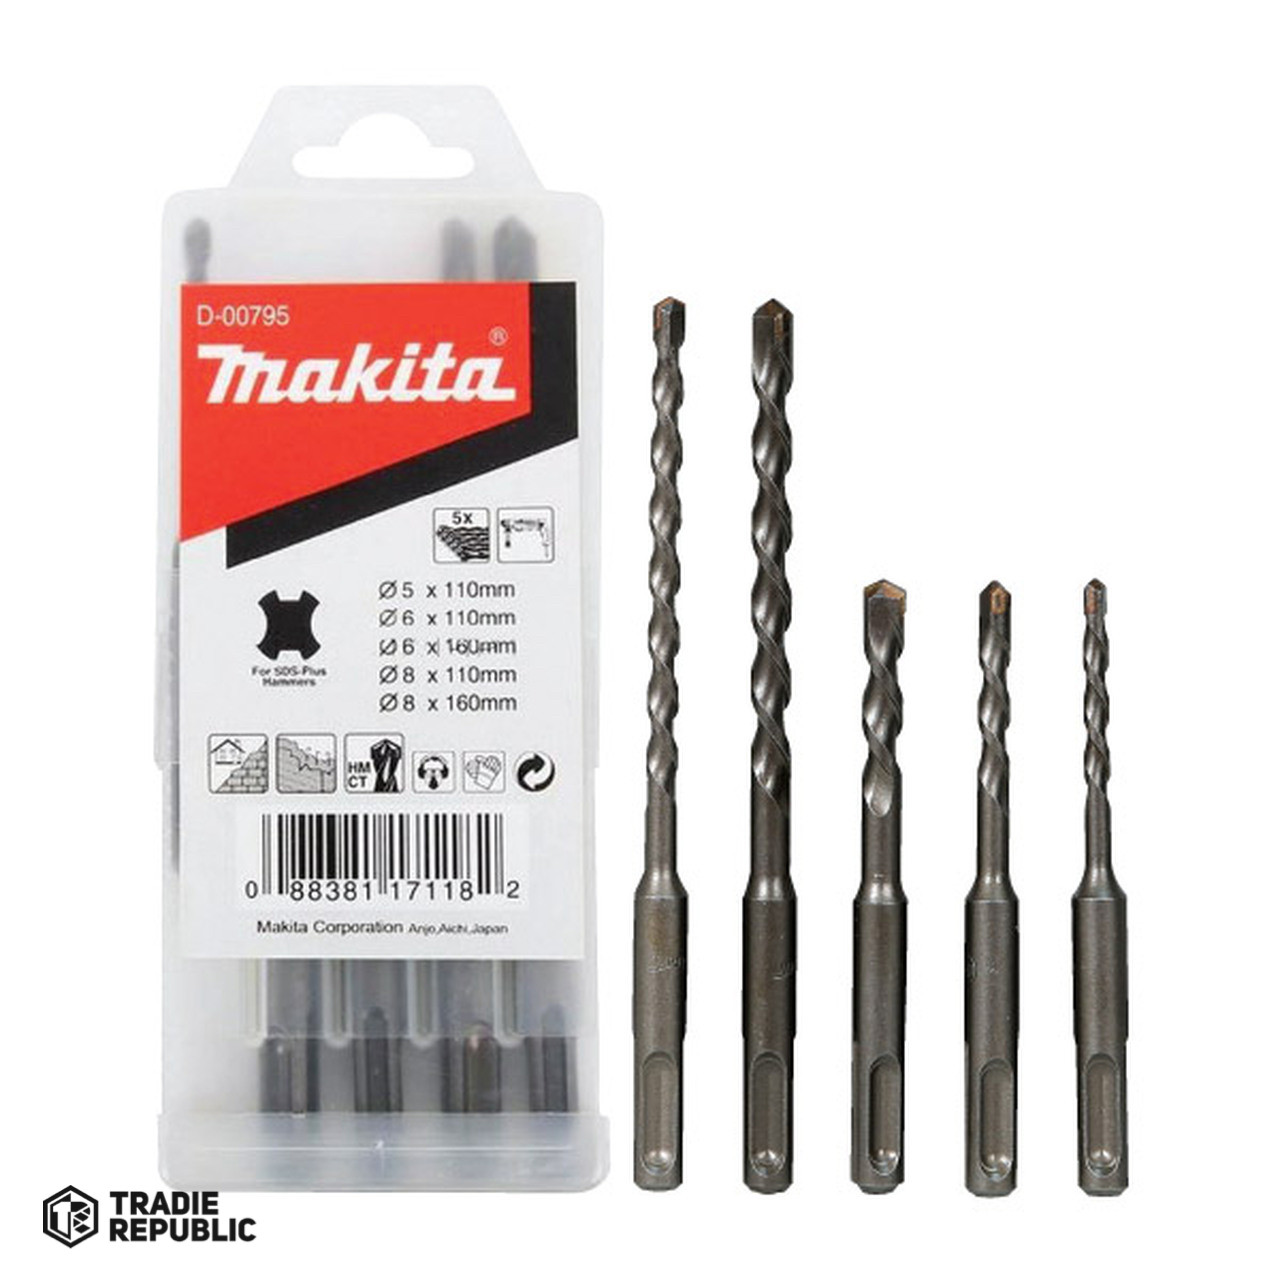 D-00795 Makita 5pc SDS-Plus Masonry Drill Bits Set D-00795